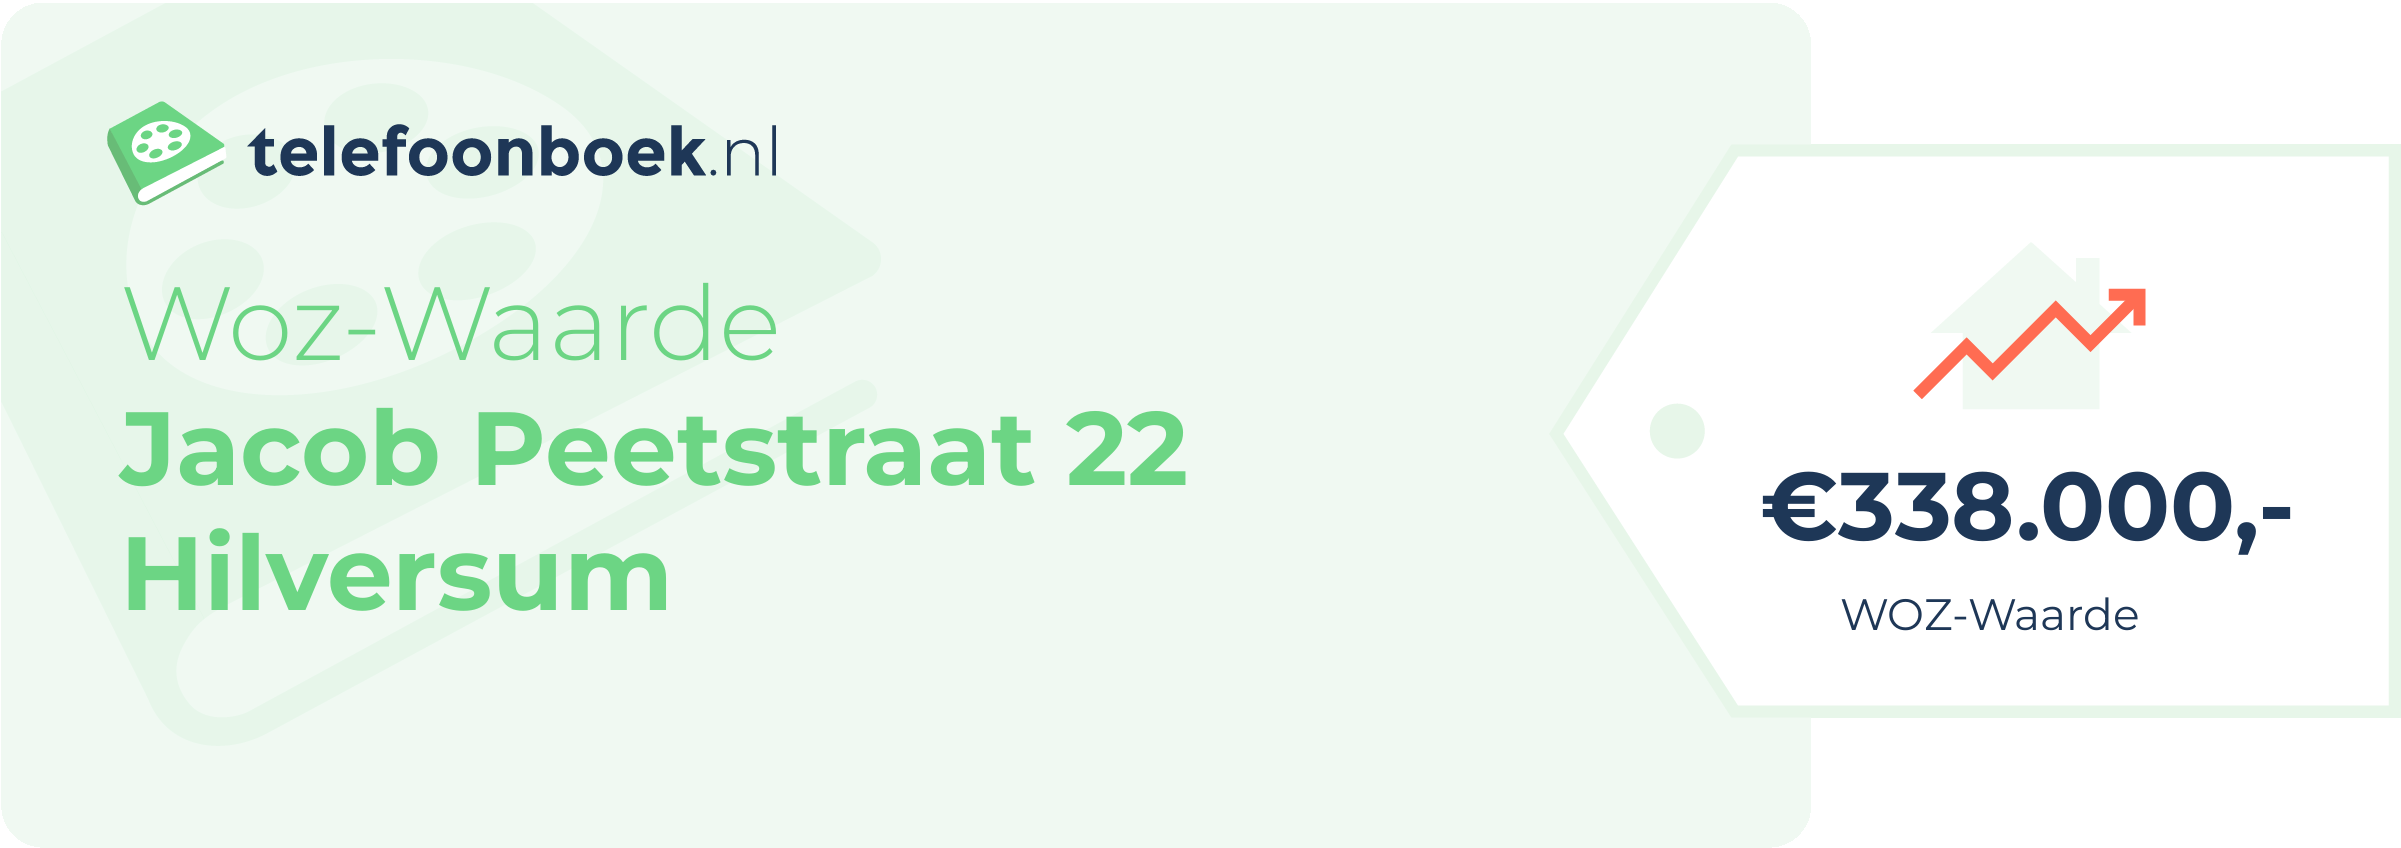 WOZ-waarde Jacob Peetstraat 22 Hilversum